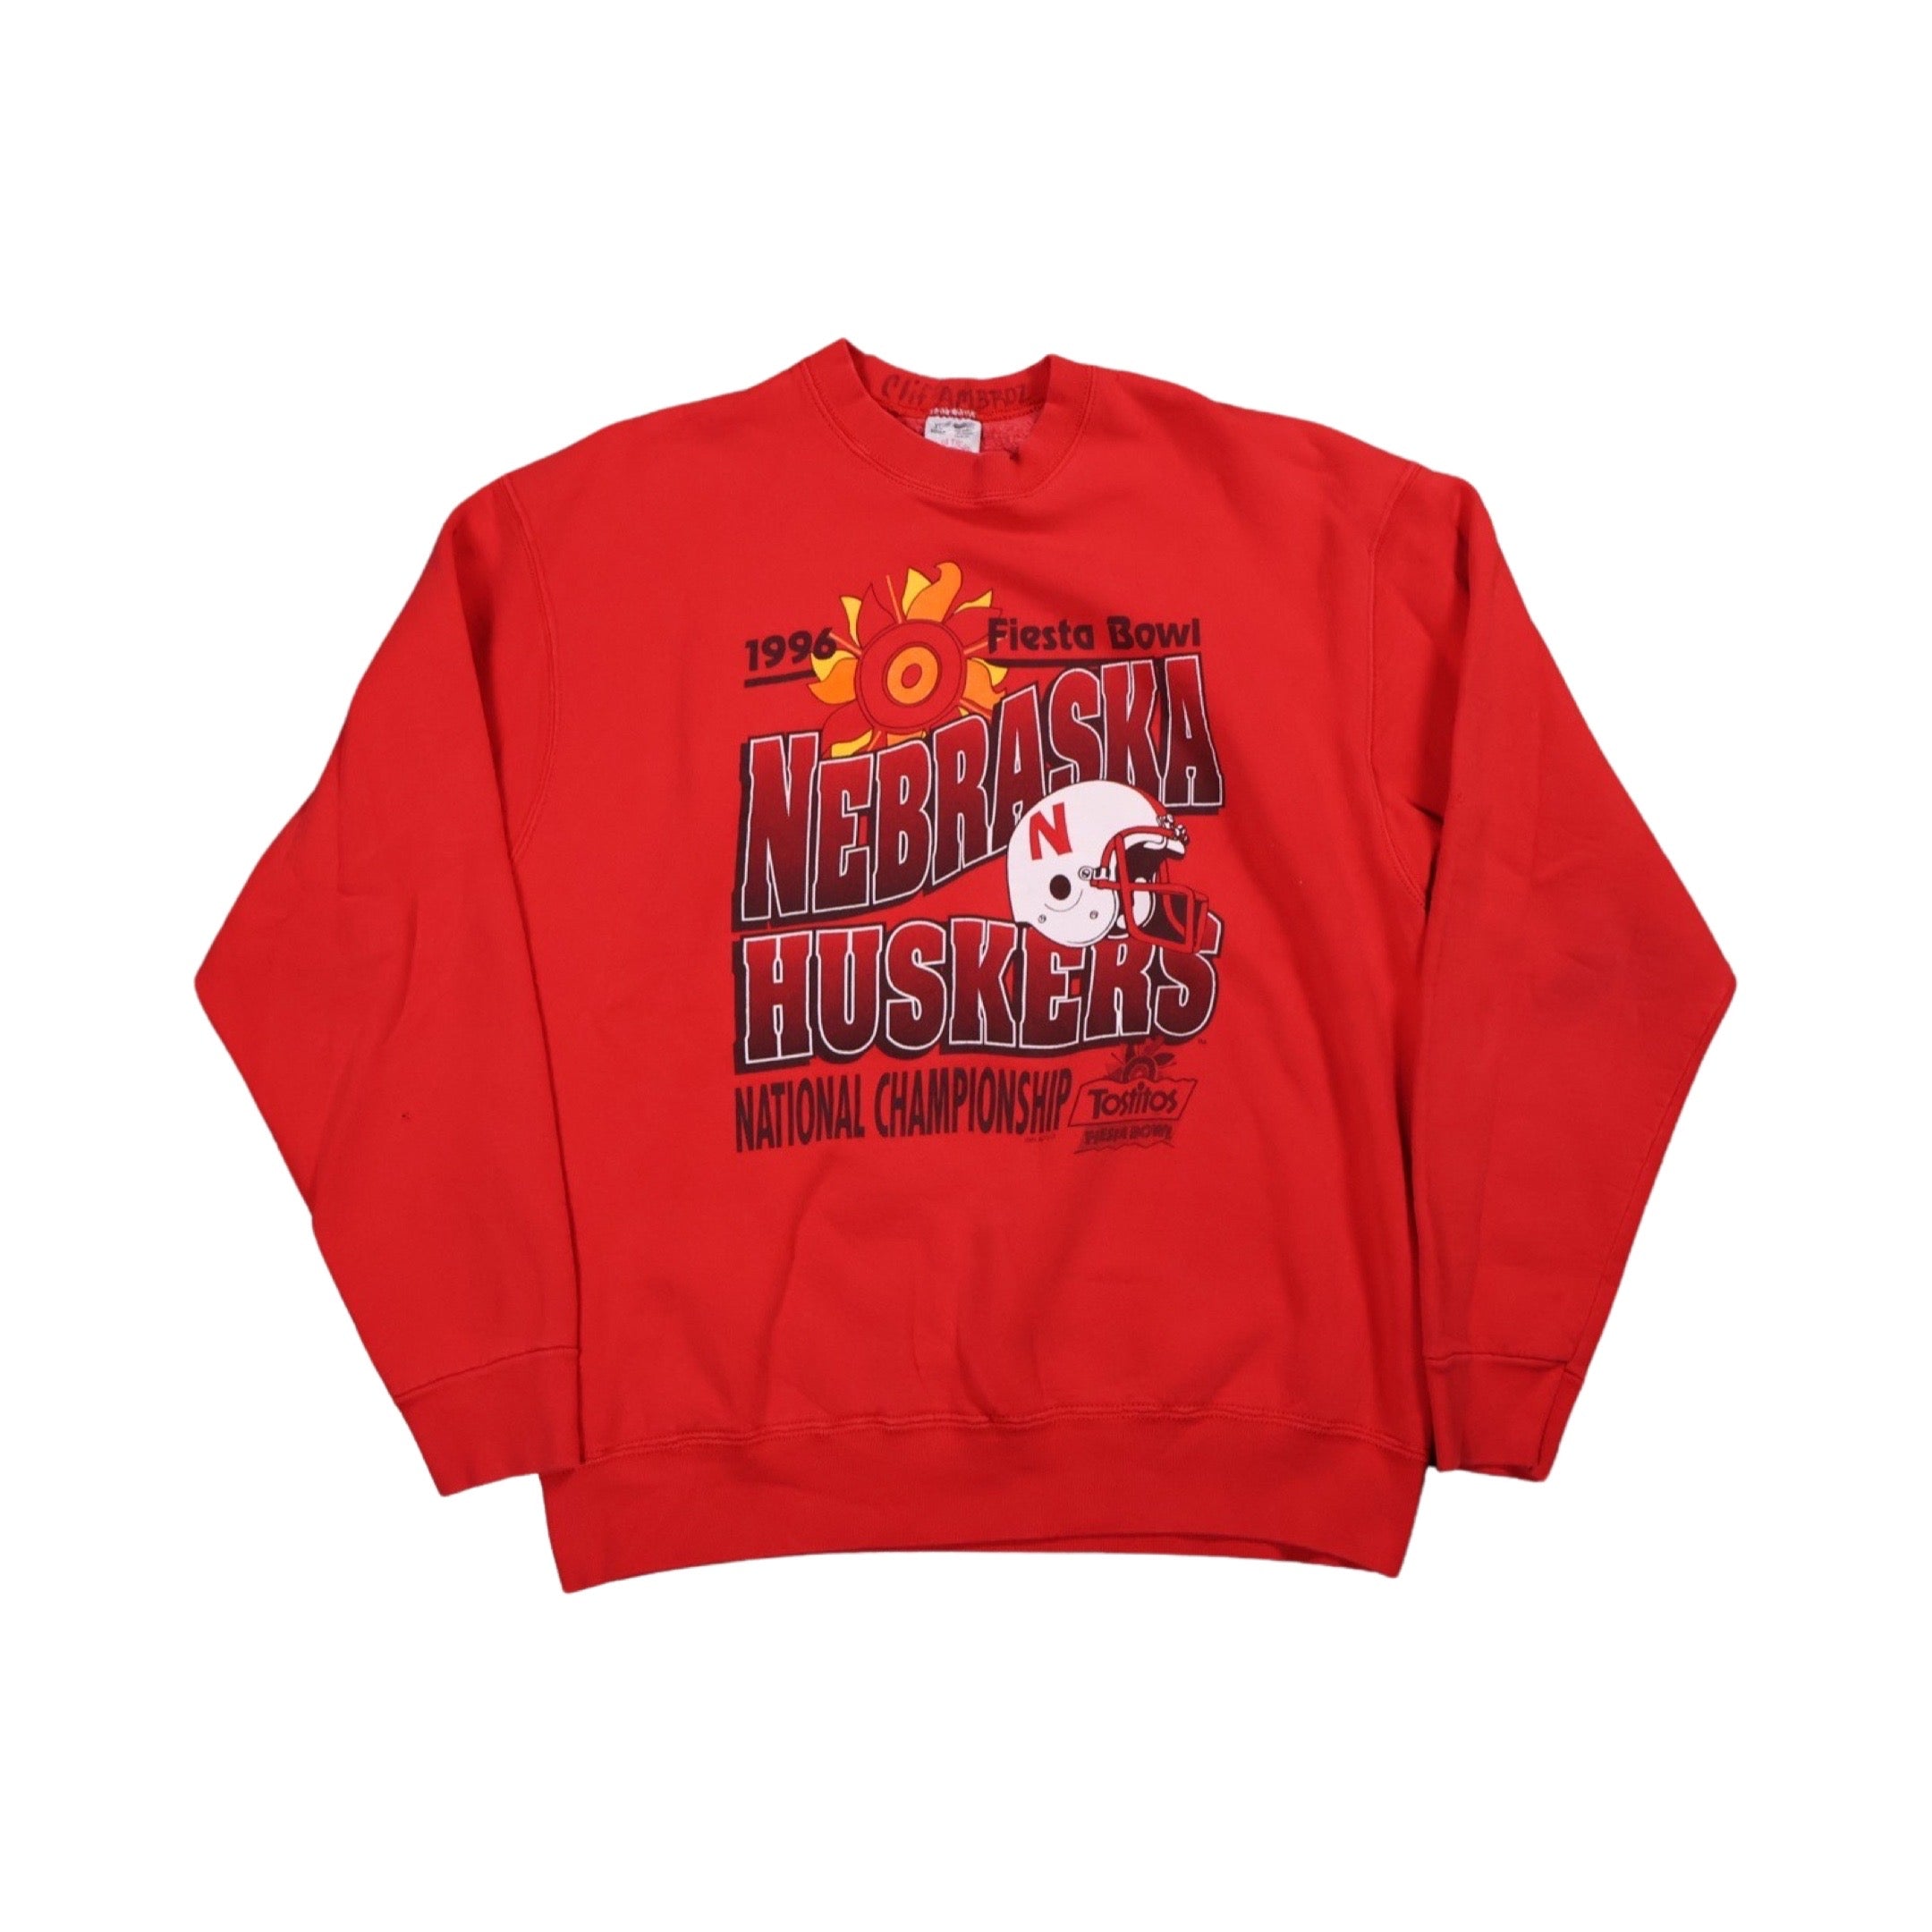 Nebraska Huskers 1996 National Champs Sweater (XL)